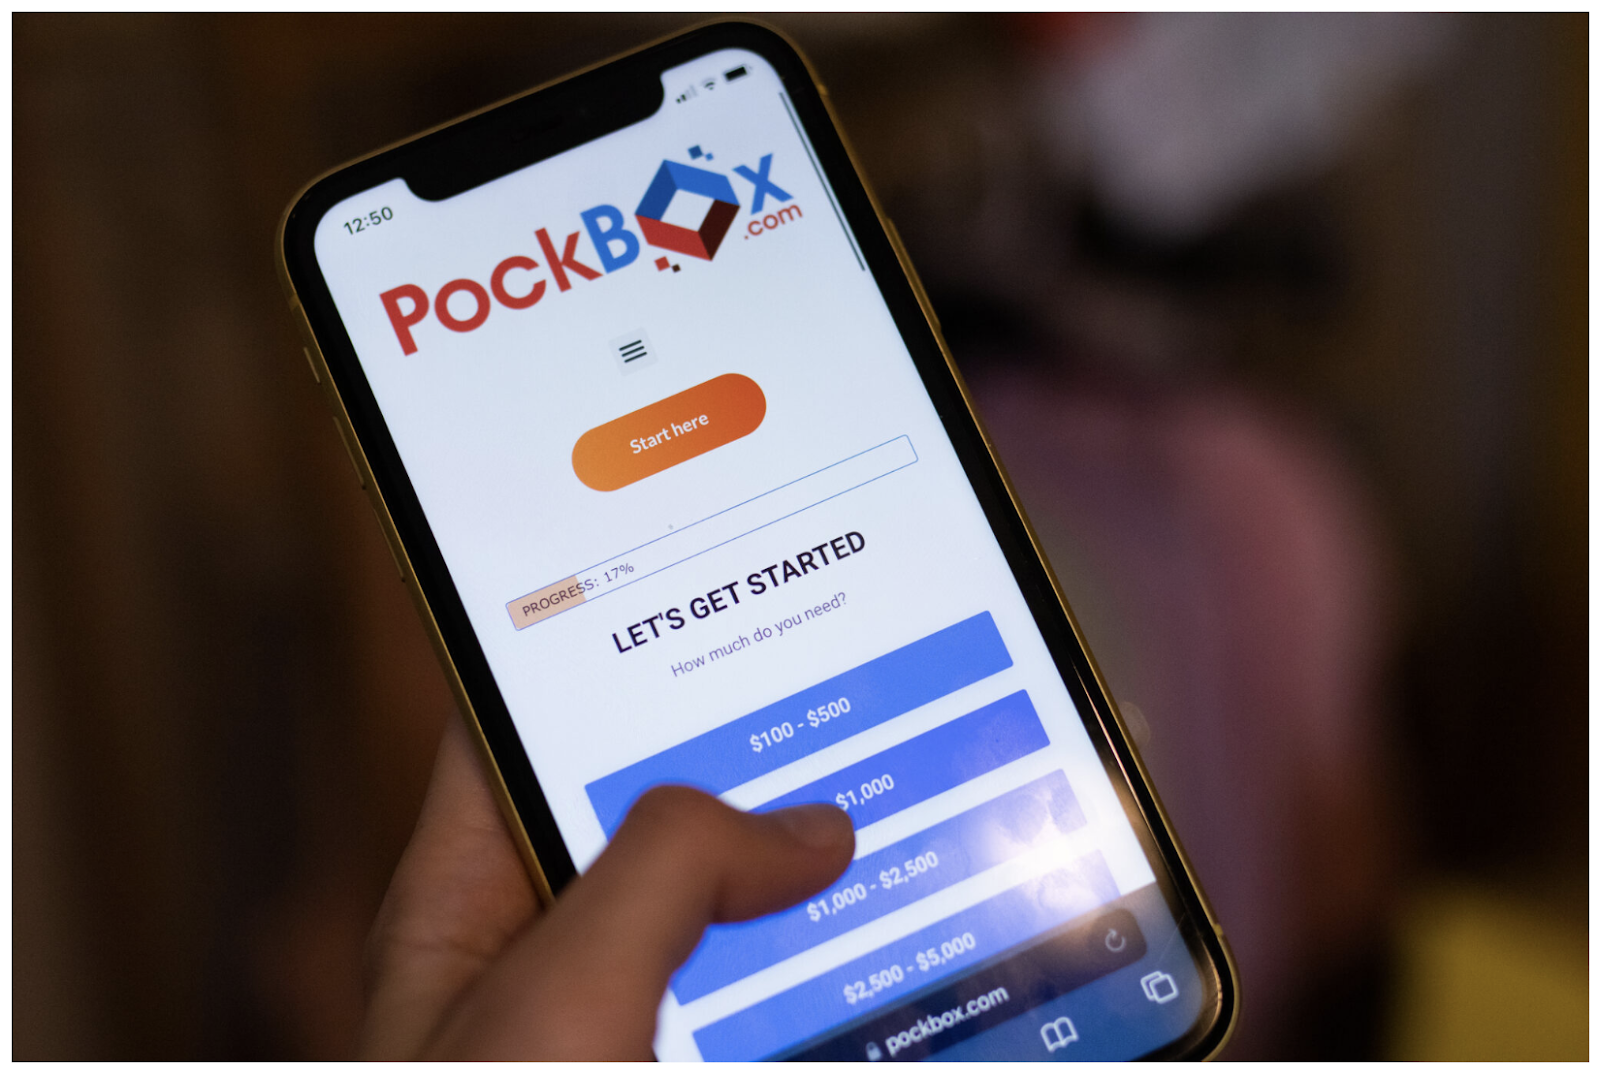 pockbox app for borrowers with bad credit